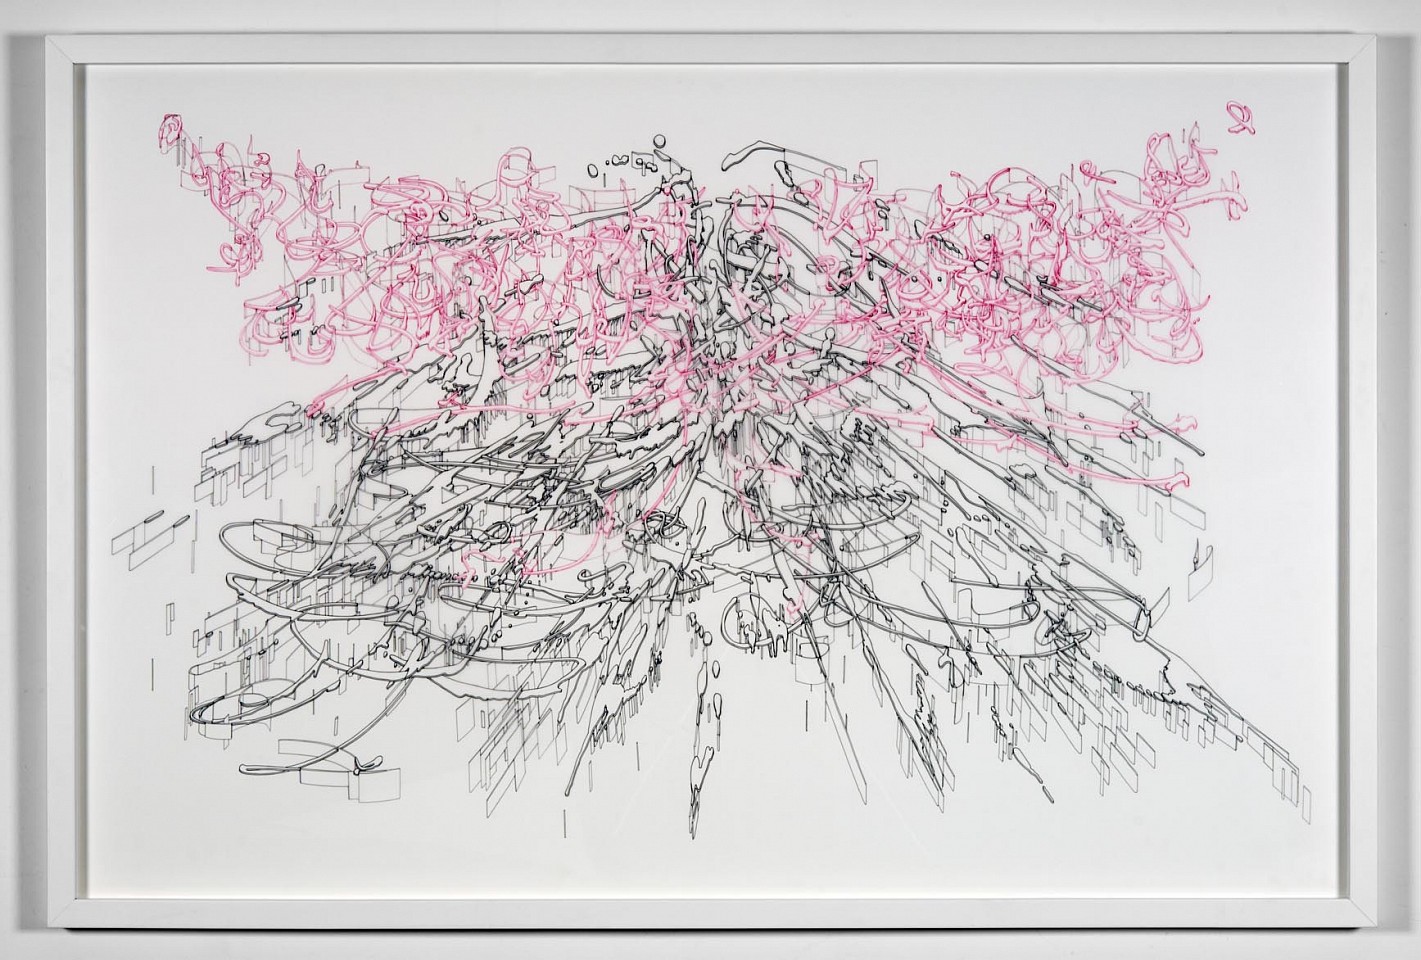 FELICE GRODIN, Where Angels fear to Tread, 2008
ink on mylar, 42 x 64 in. (106.7 x 162.6 cm)
FG-C-0017